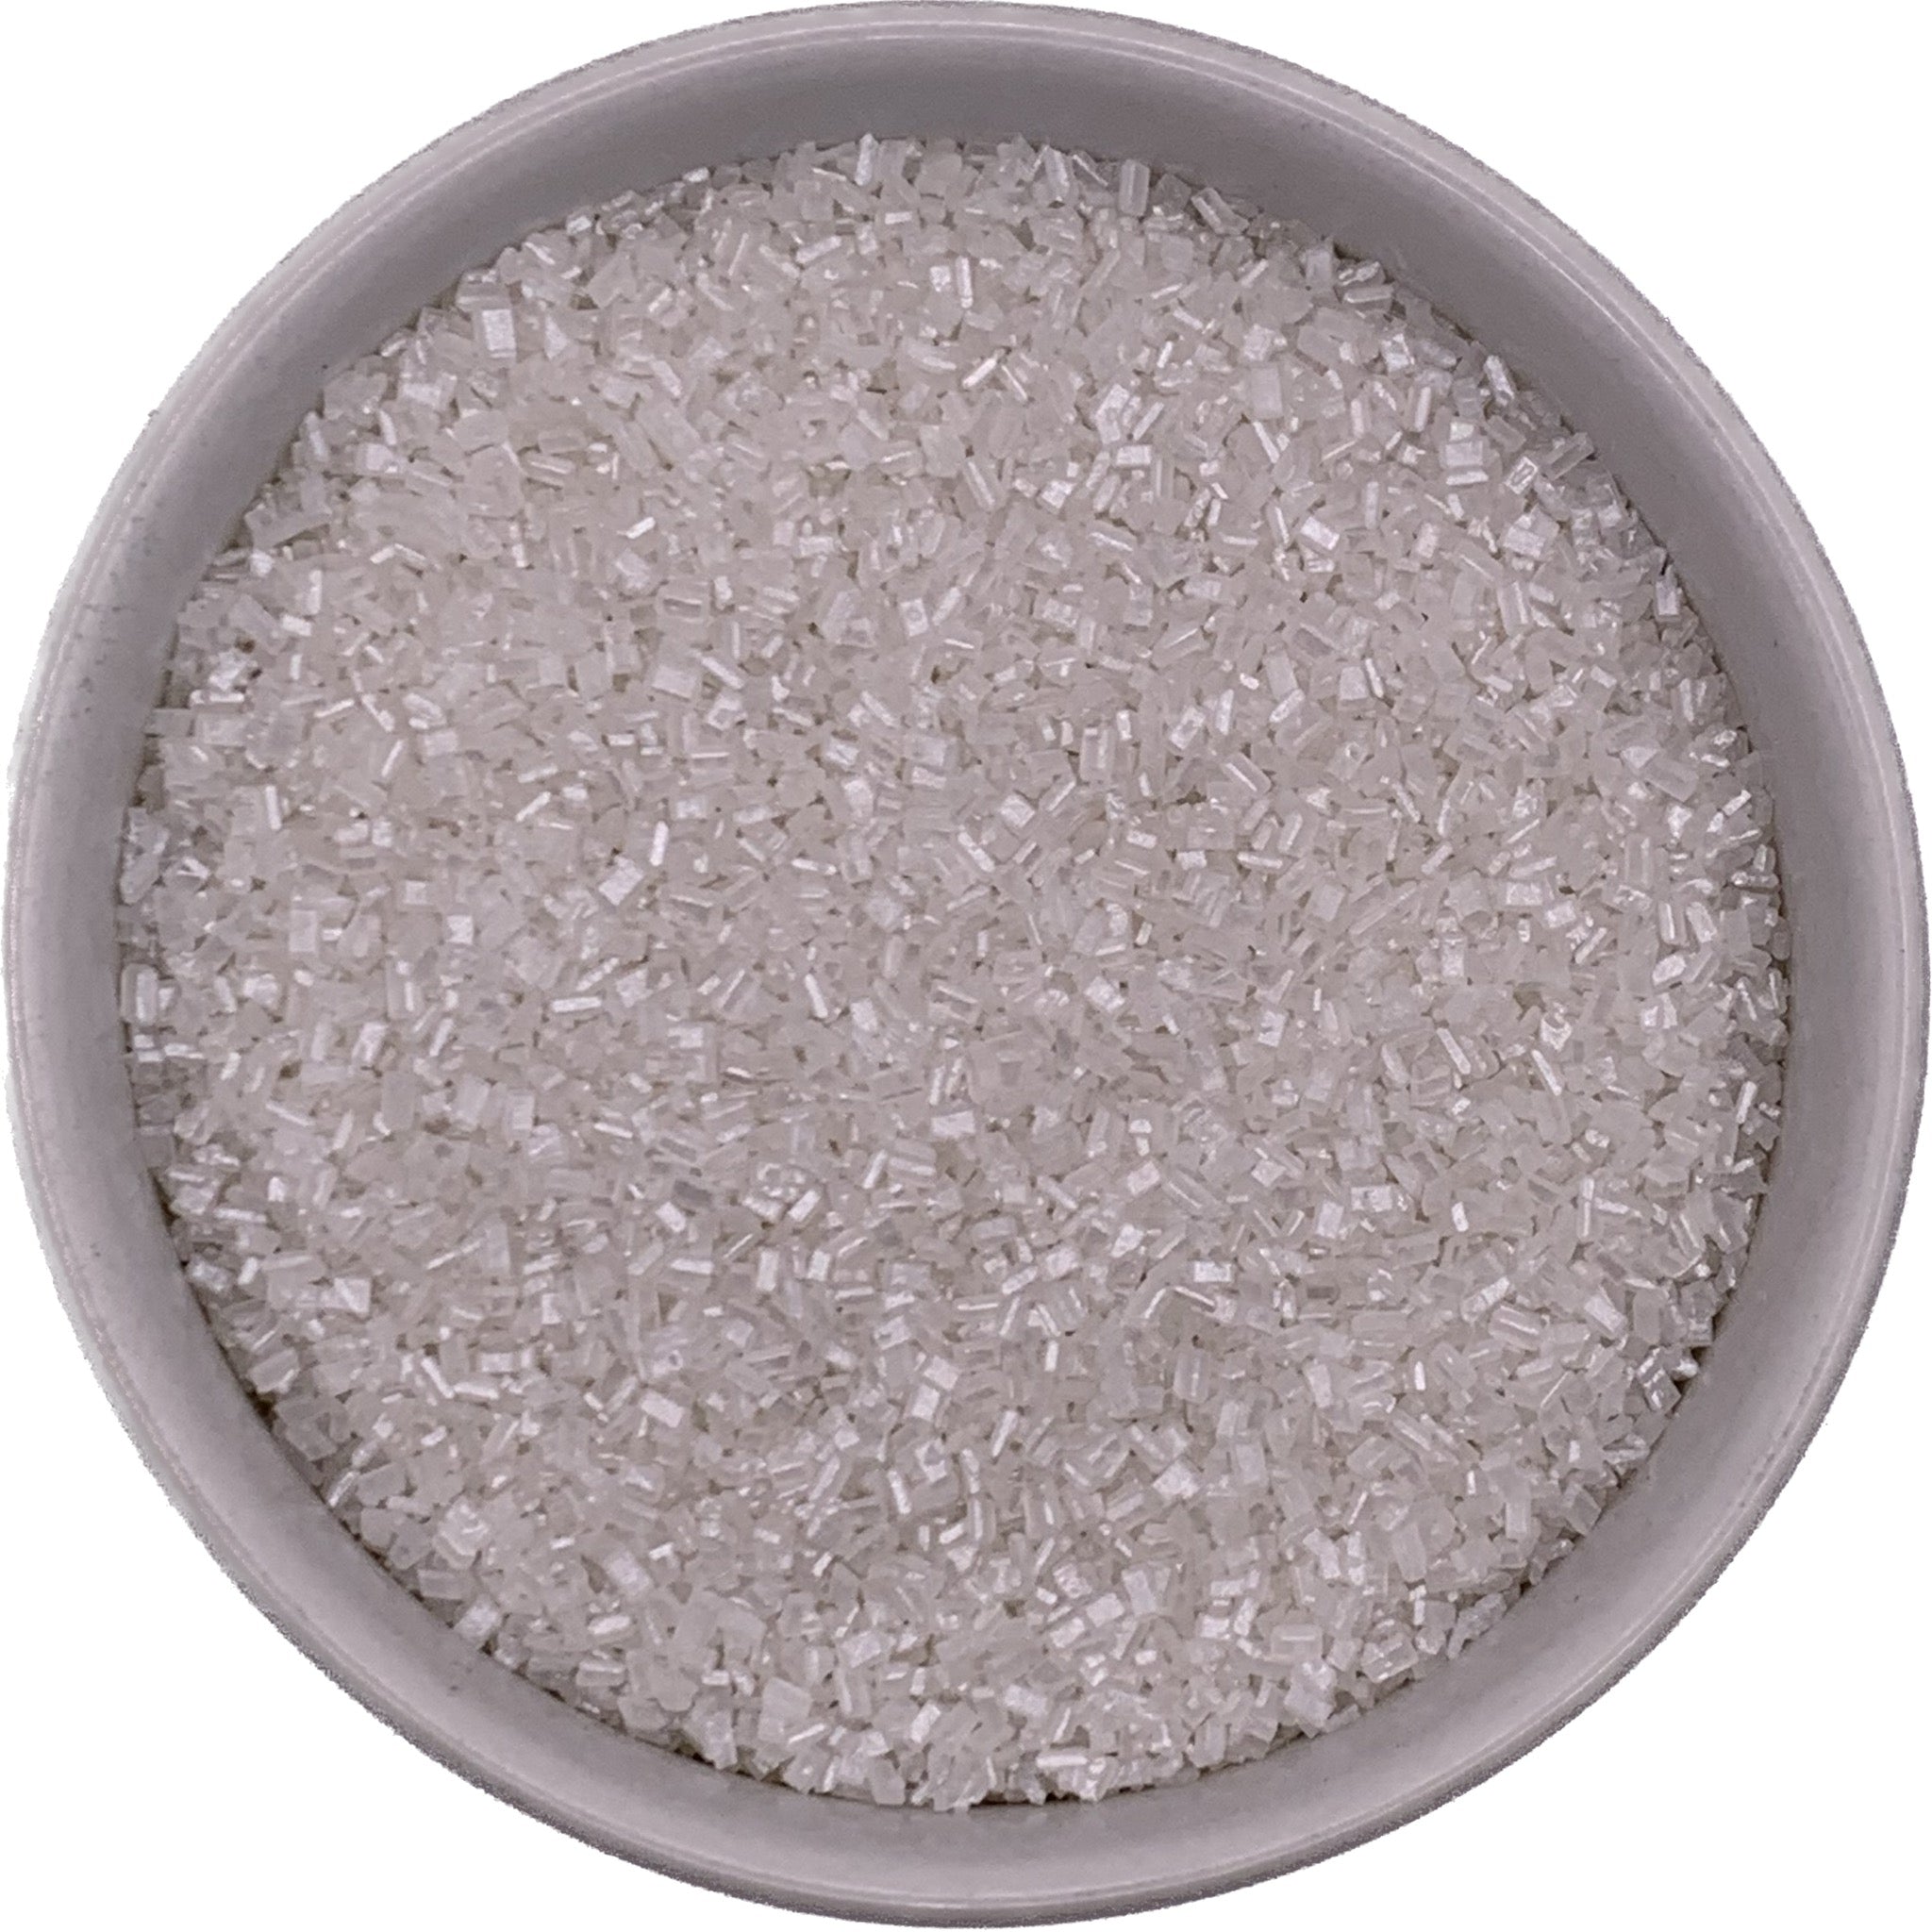 Silver Sugar Pearls Sprinkles: 4.8-Ounce Bottle